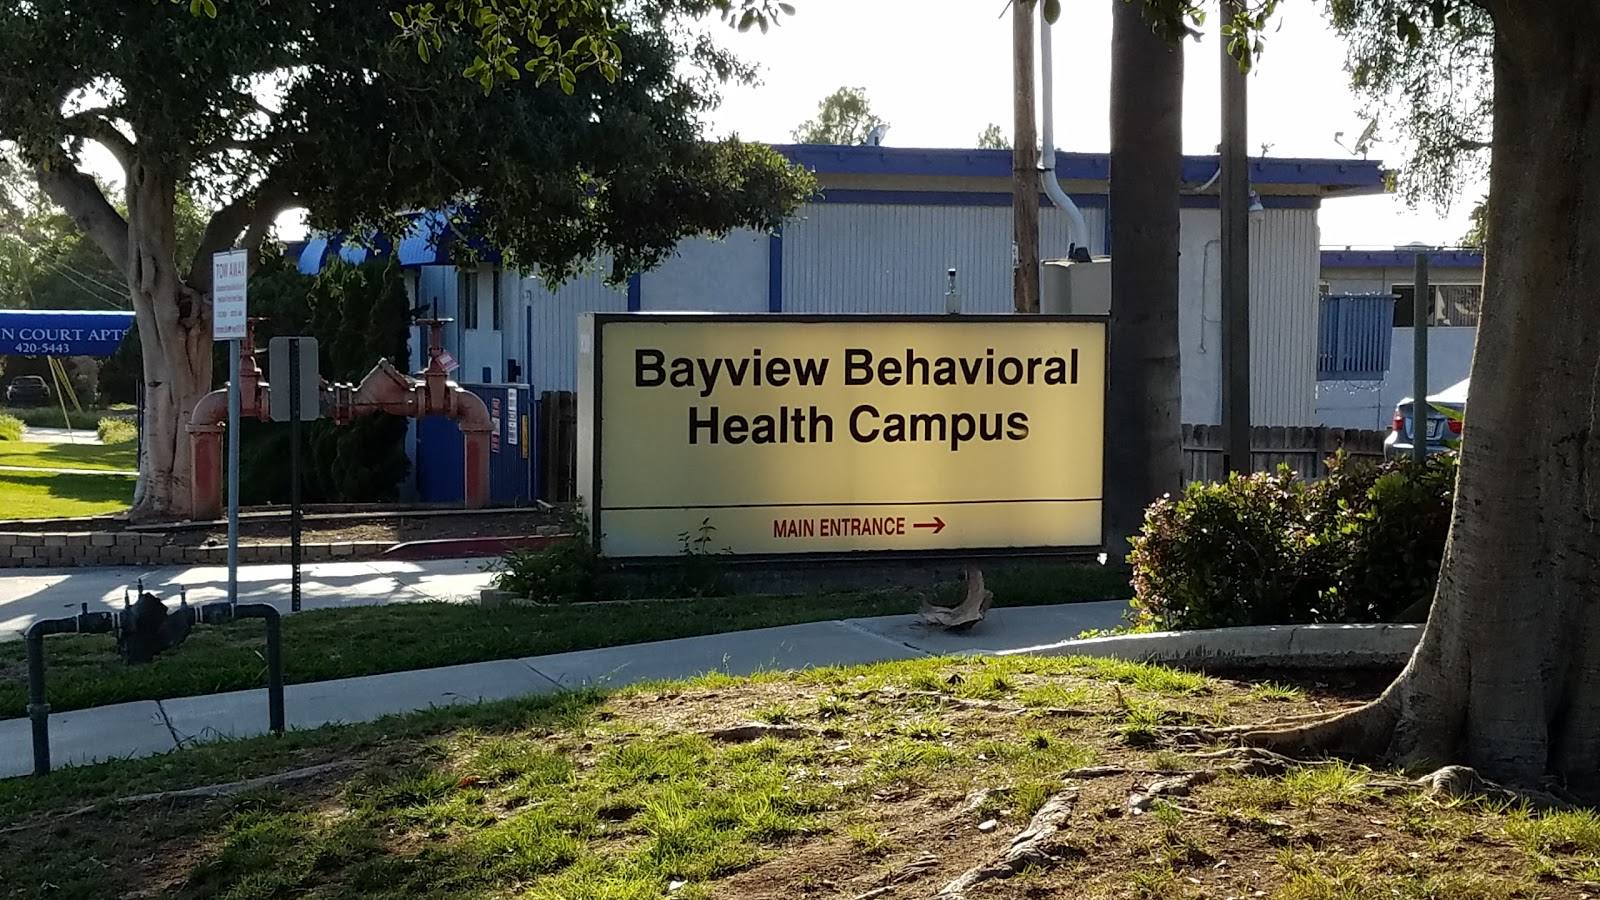 Bayview Behavioral Health Campus